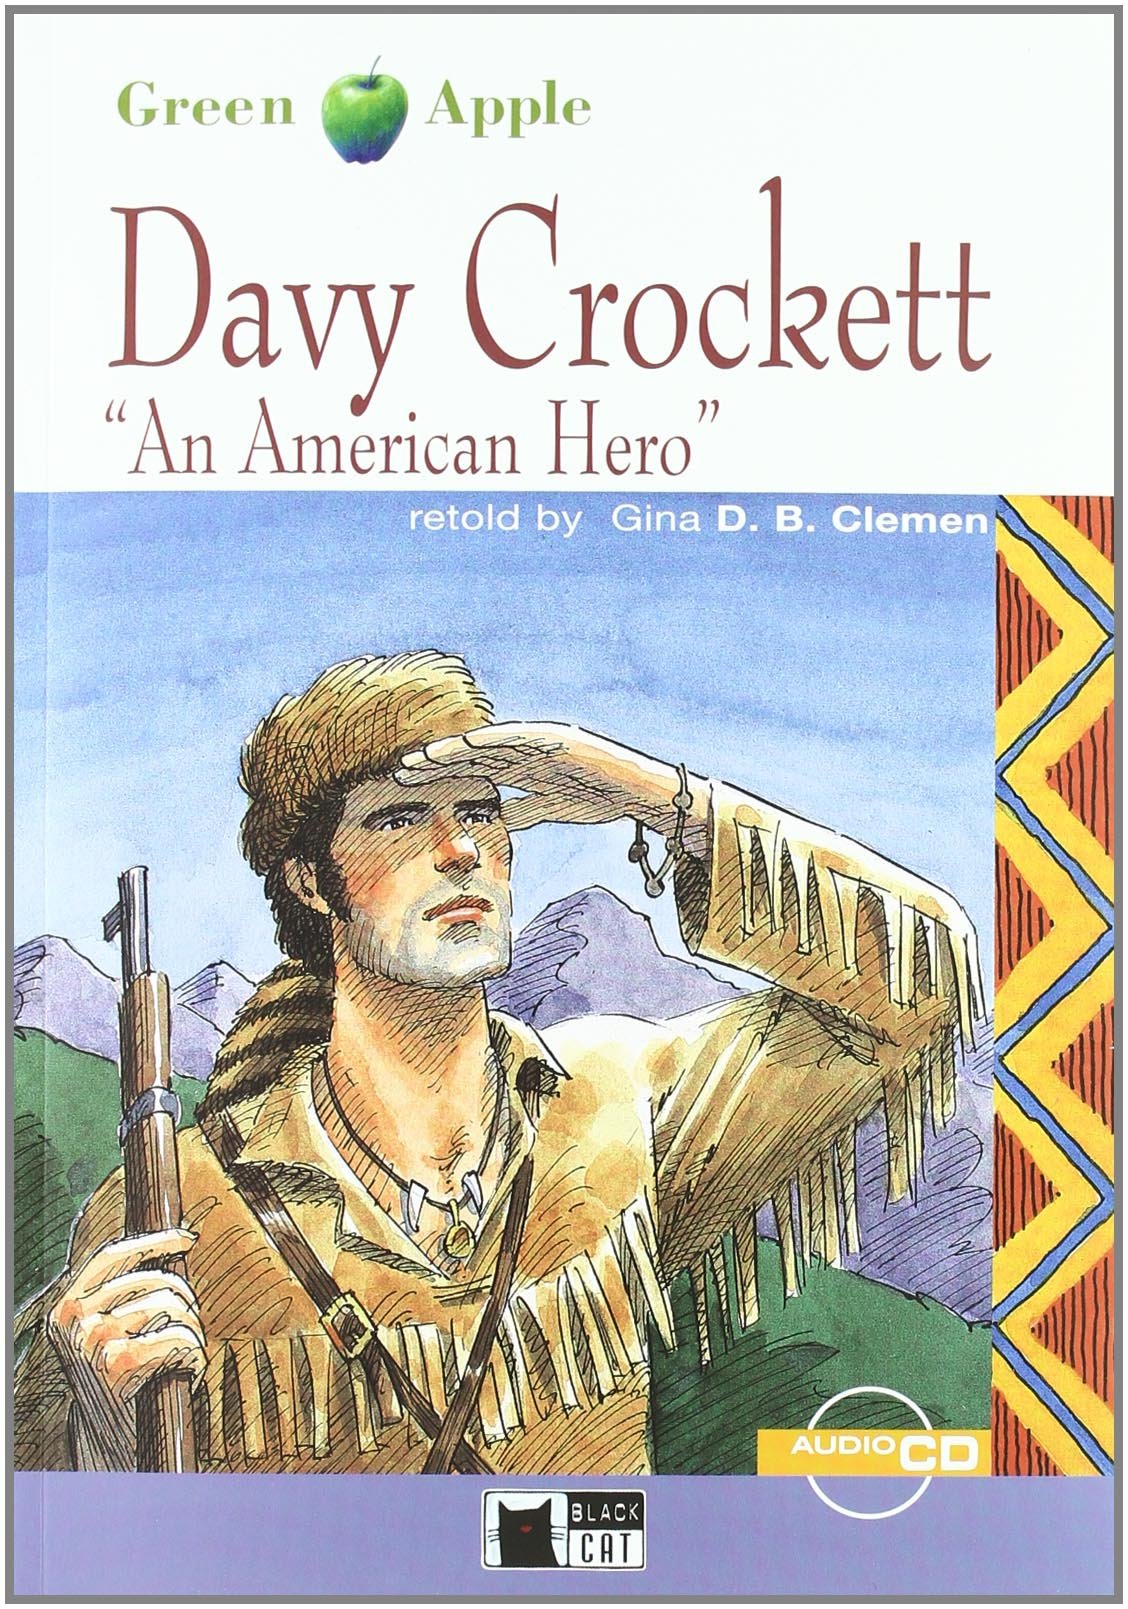  Davy Crockett, An American Hero